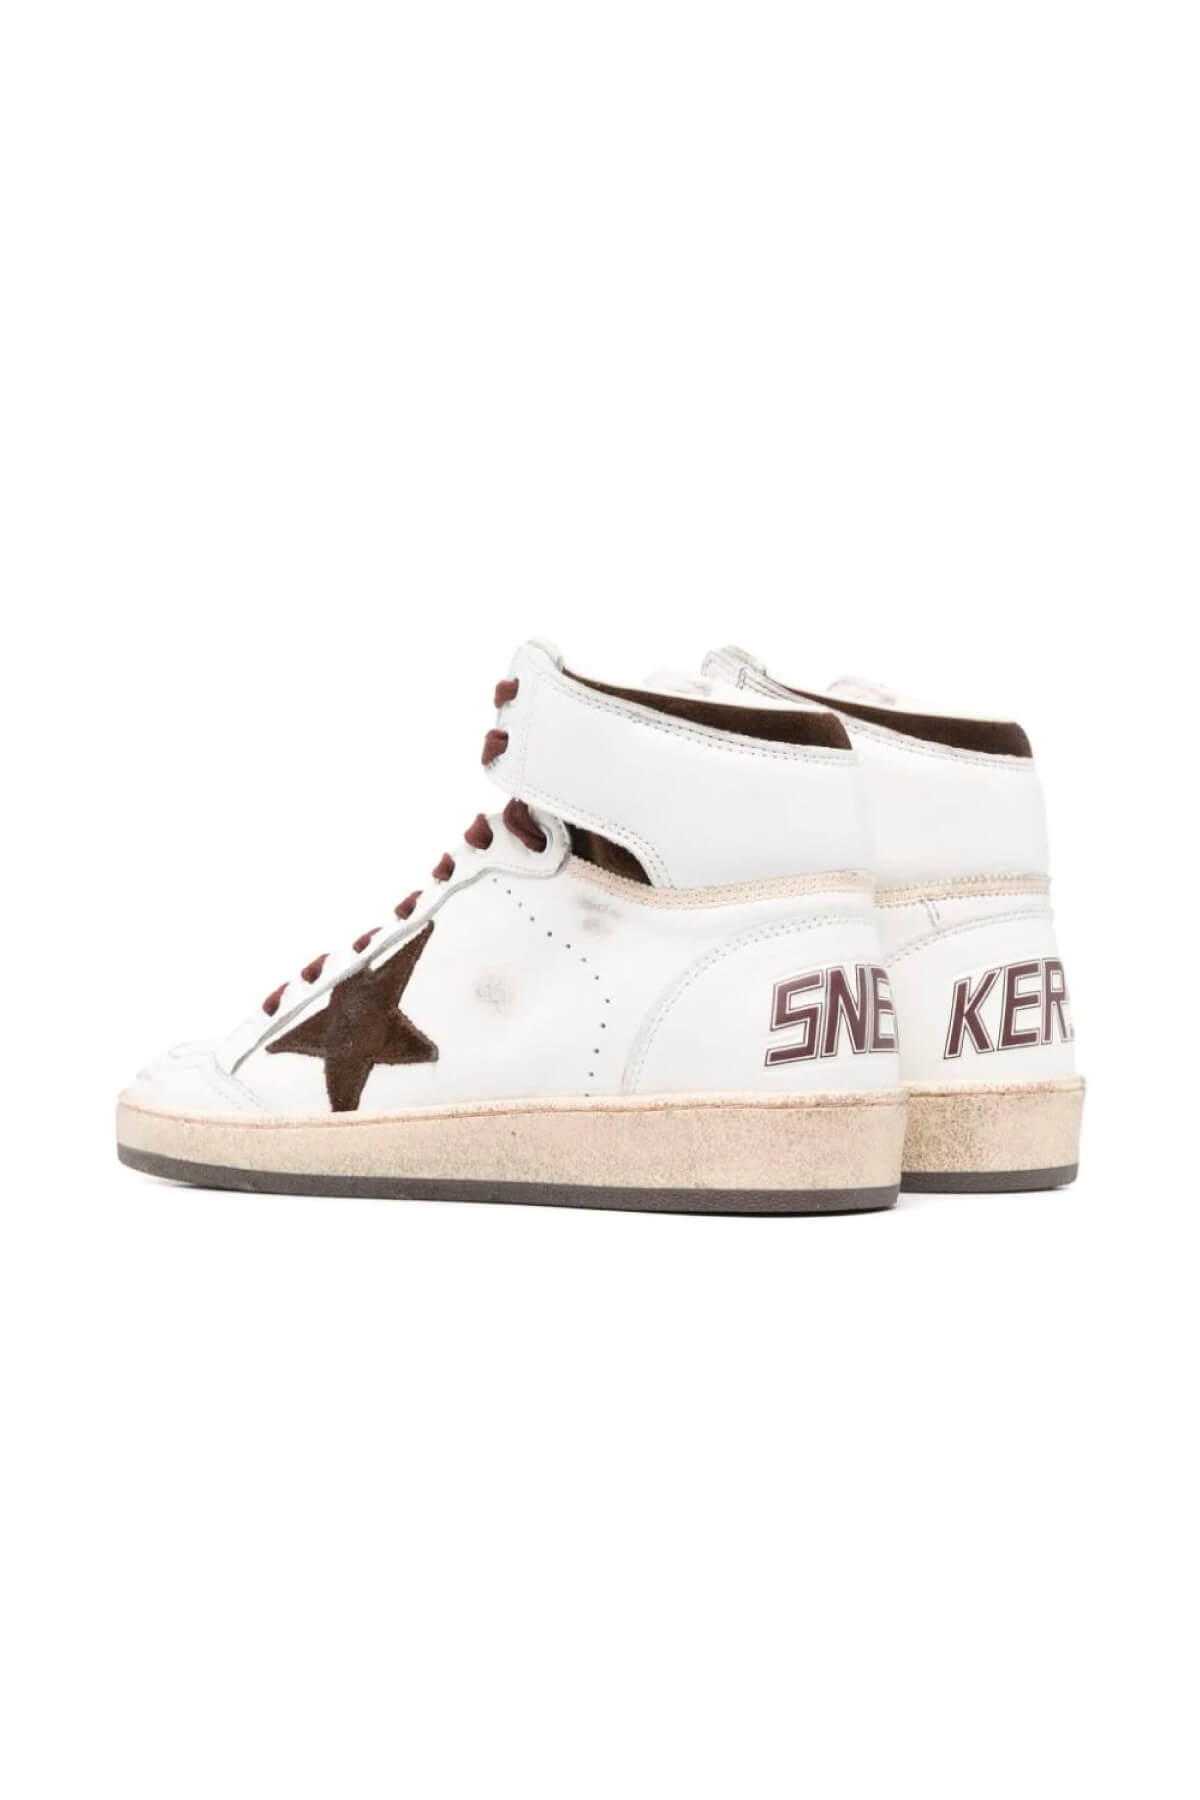 Golden Goose Sky Star Sneakers - White/ Beige/ Chocolate Brown